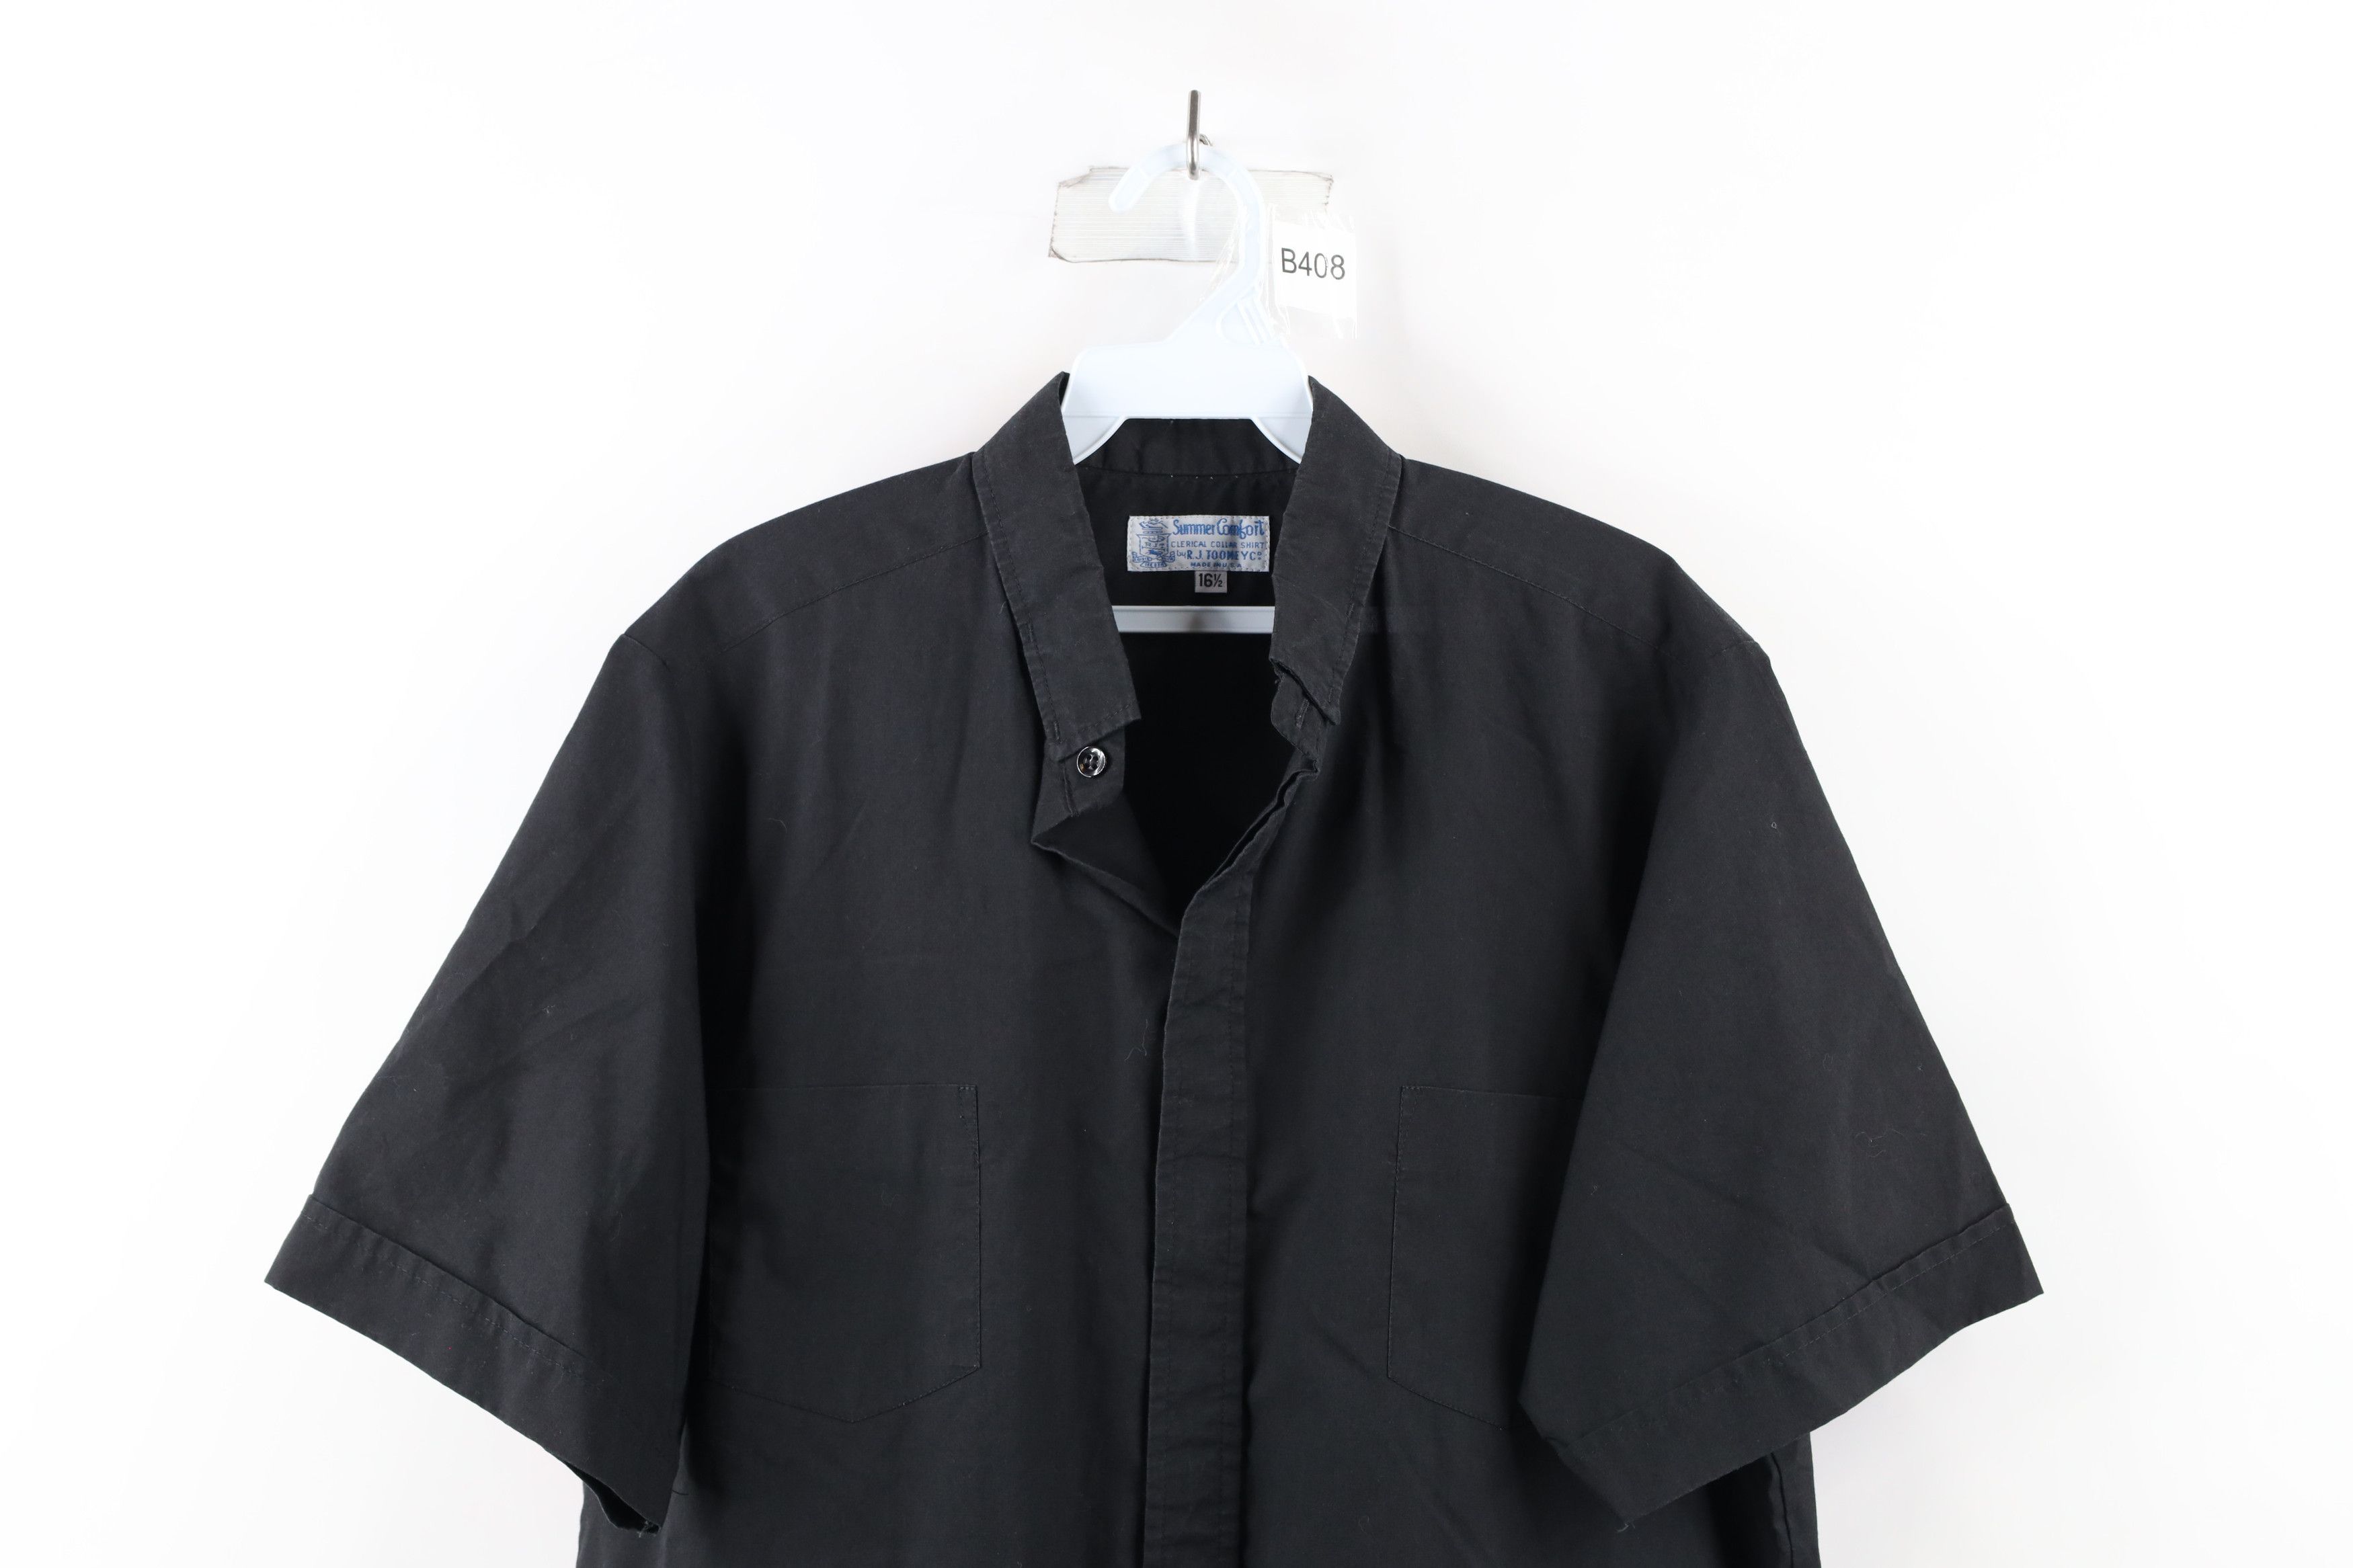 Vintage Vintage 60s 70s Streetwear Collar Button Shirt Black USA Size US M / EU 48-50 / 2 - 2 Preview